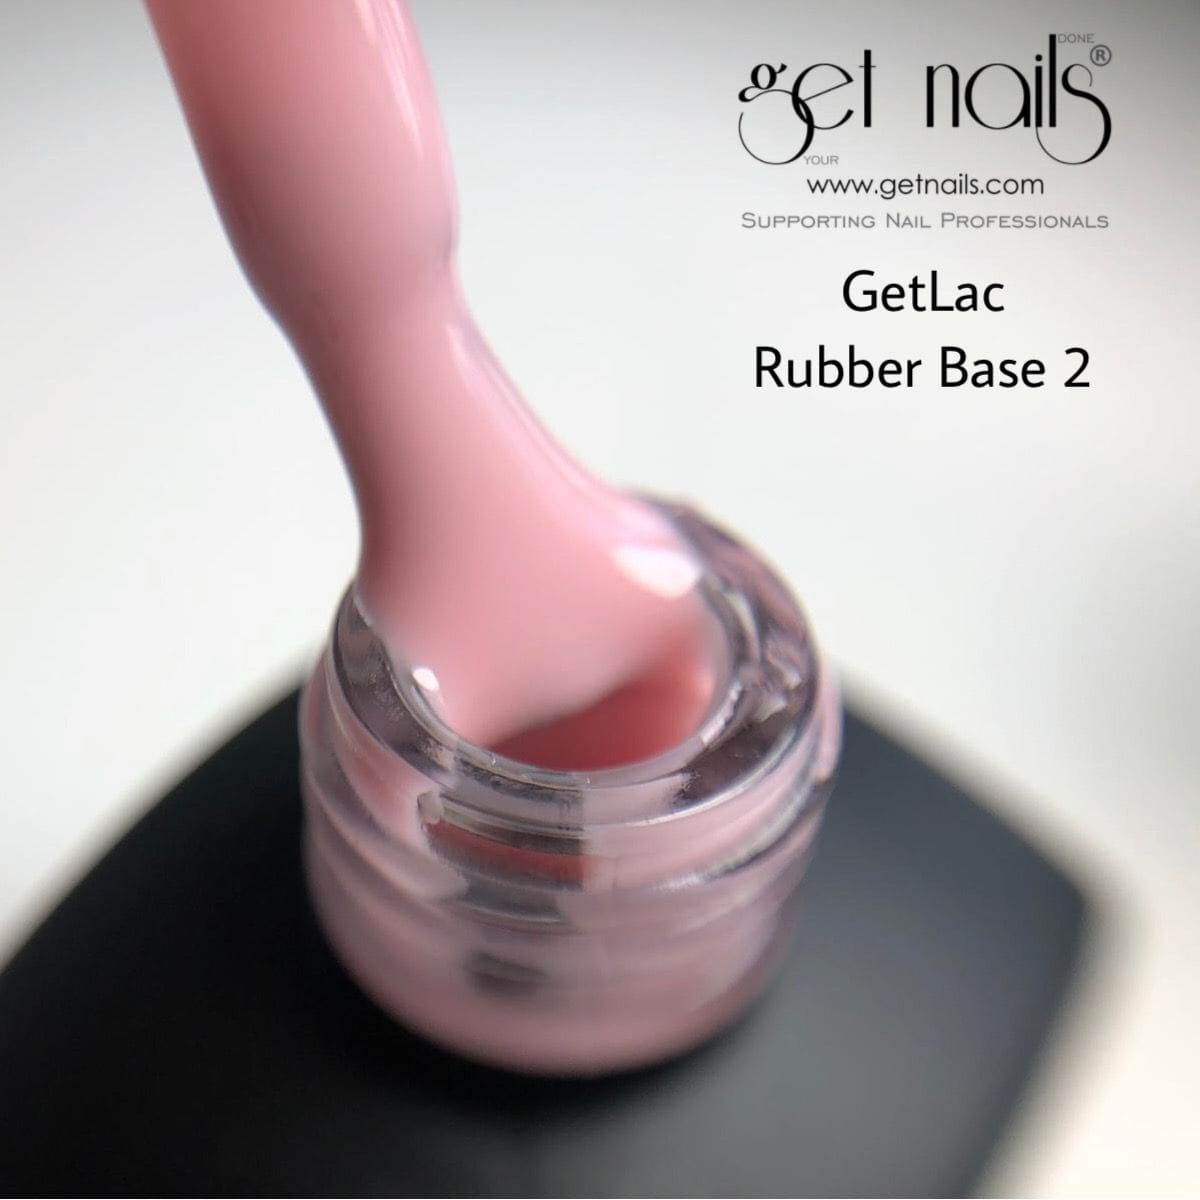 Get Nails Austria - GetLac Rubber Base 2 15g